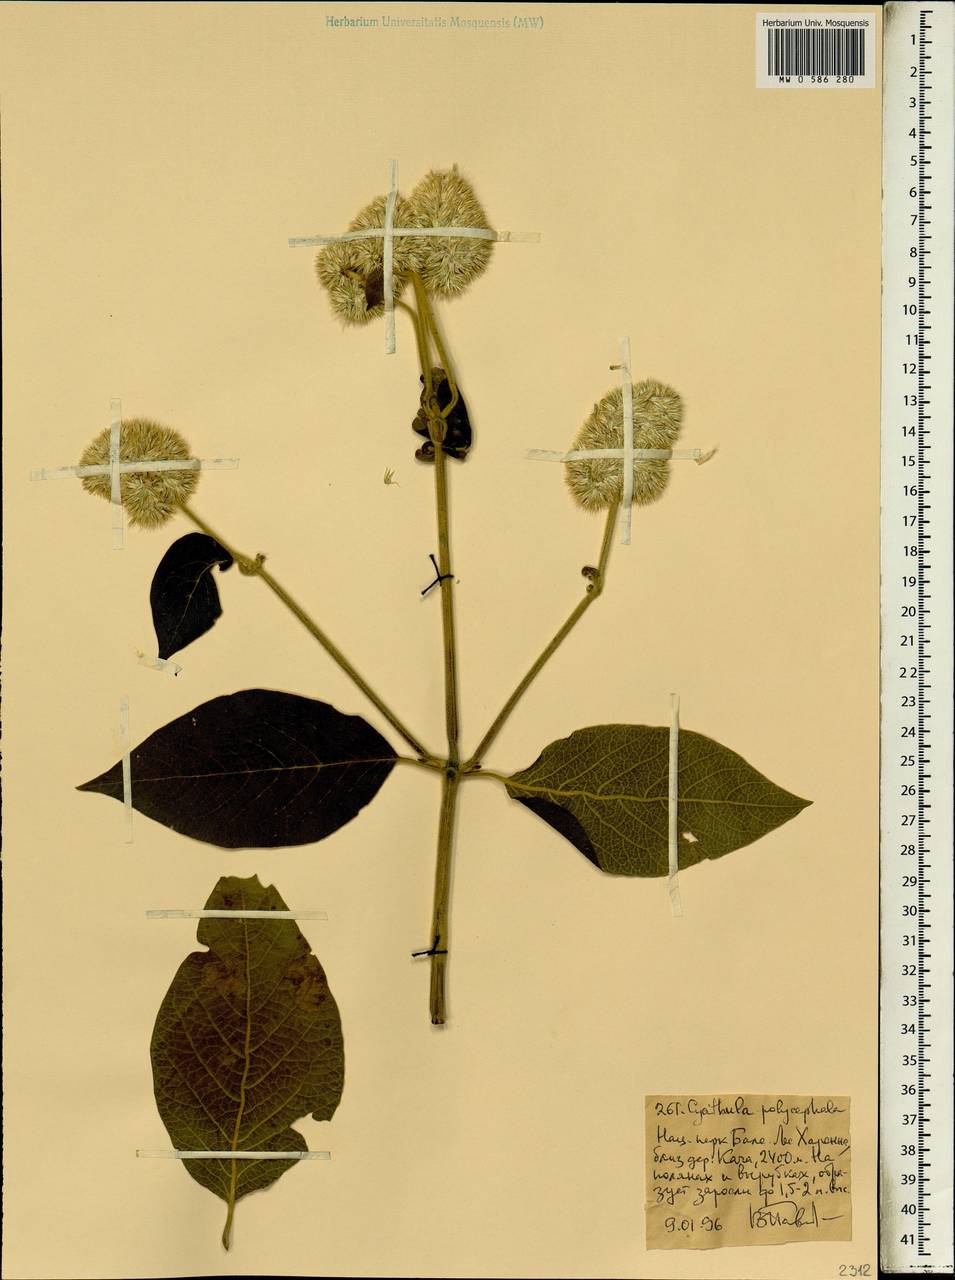 Cyathula polycephala Baker, Африка (AFR) (Эфиопия)